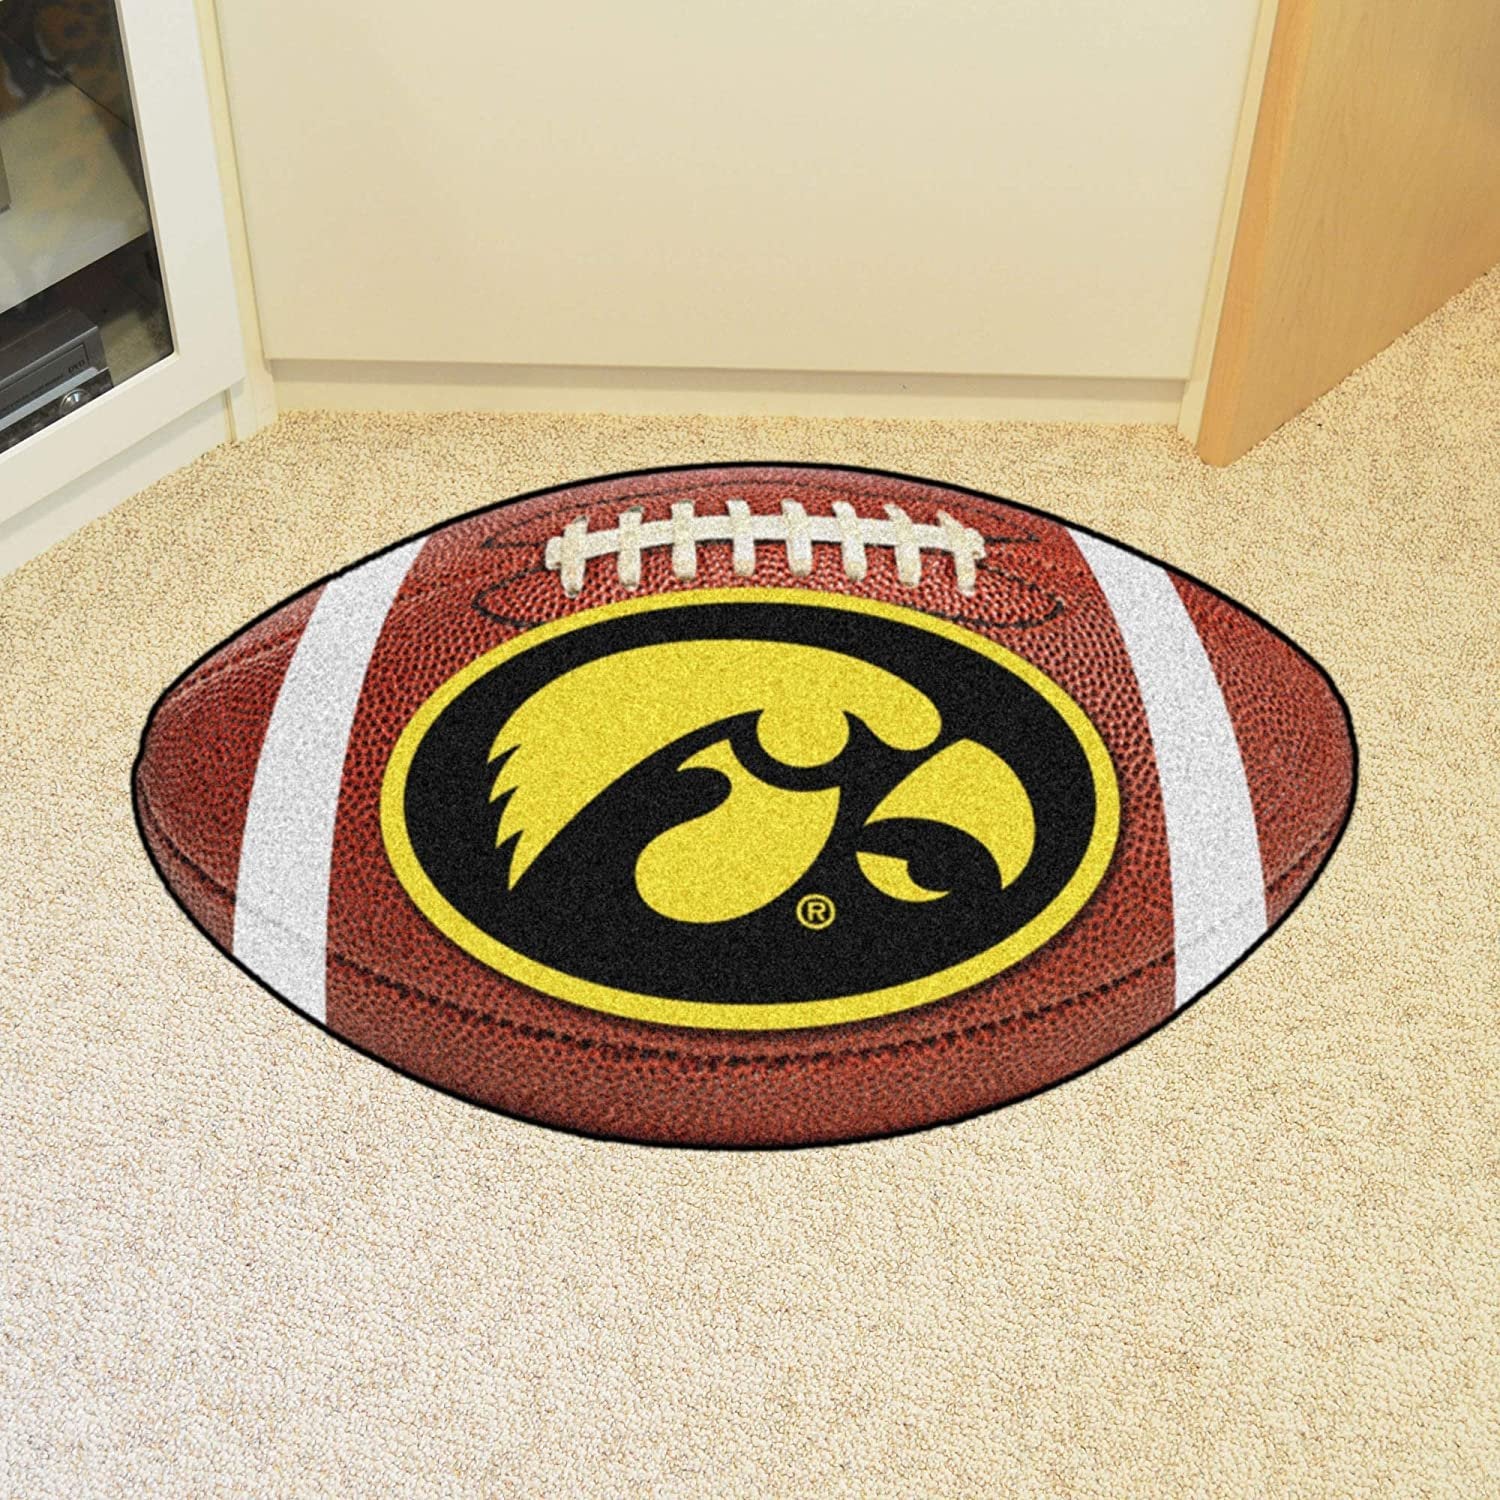 University of Iowa Hawkeyes Floor Mat Area Rug, 20x32 Inch, Non-Skid Backing, Football Design